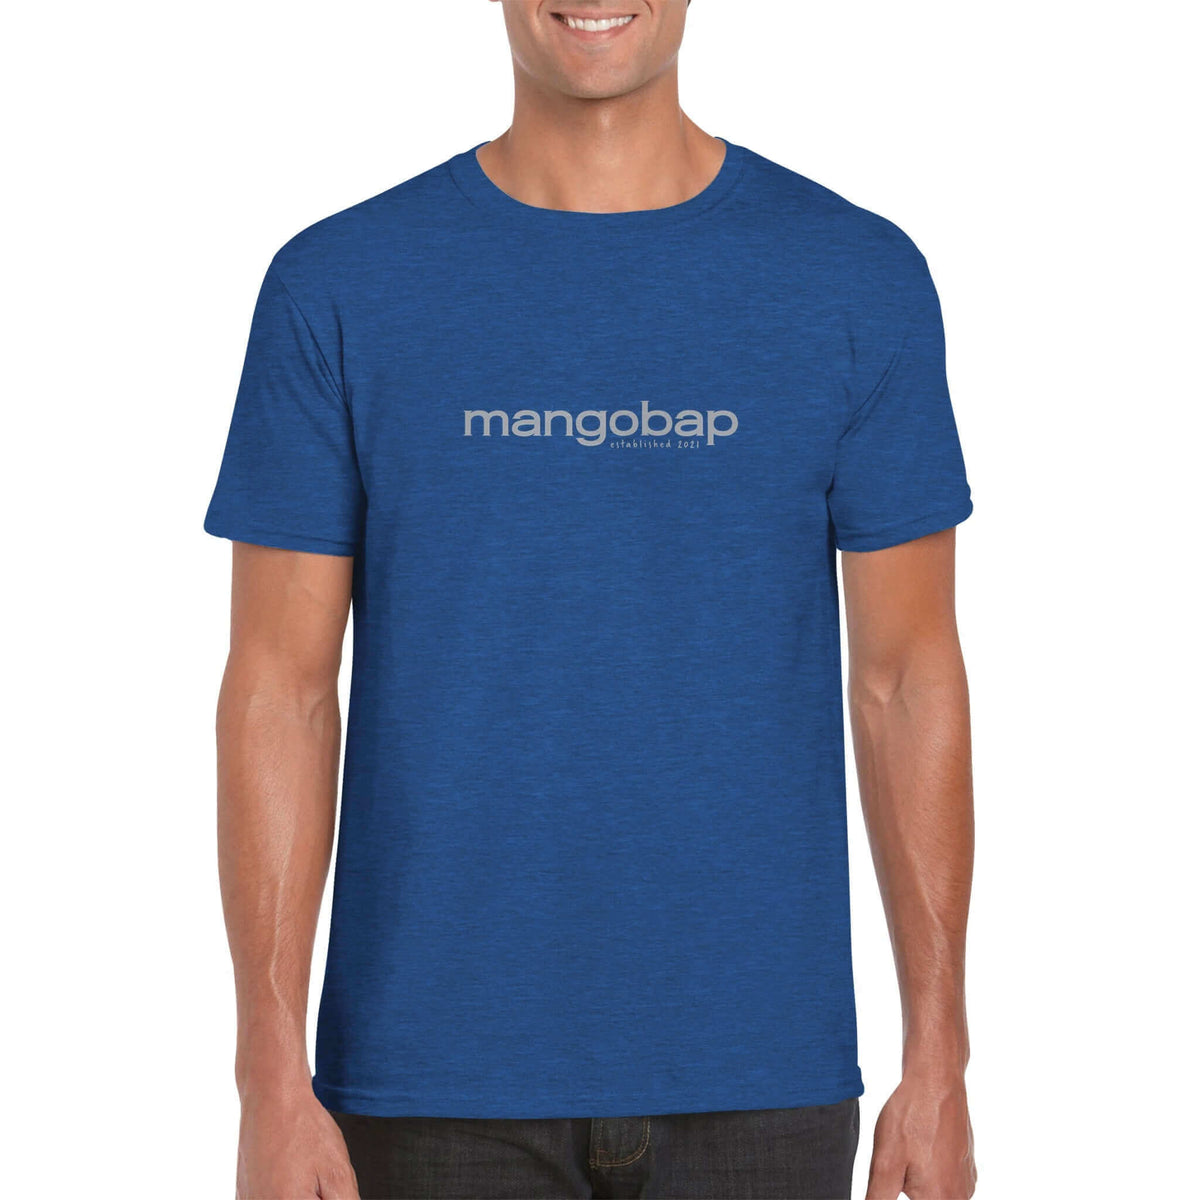 MangoBap blue heather t shirt - MangoBap